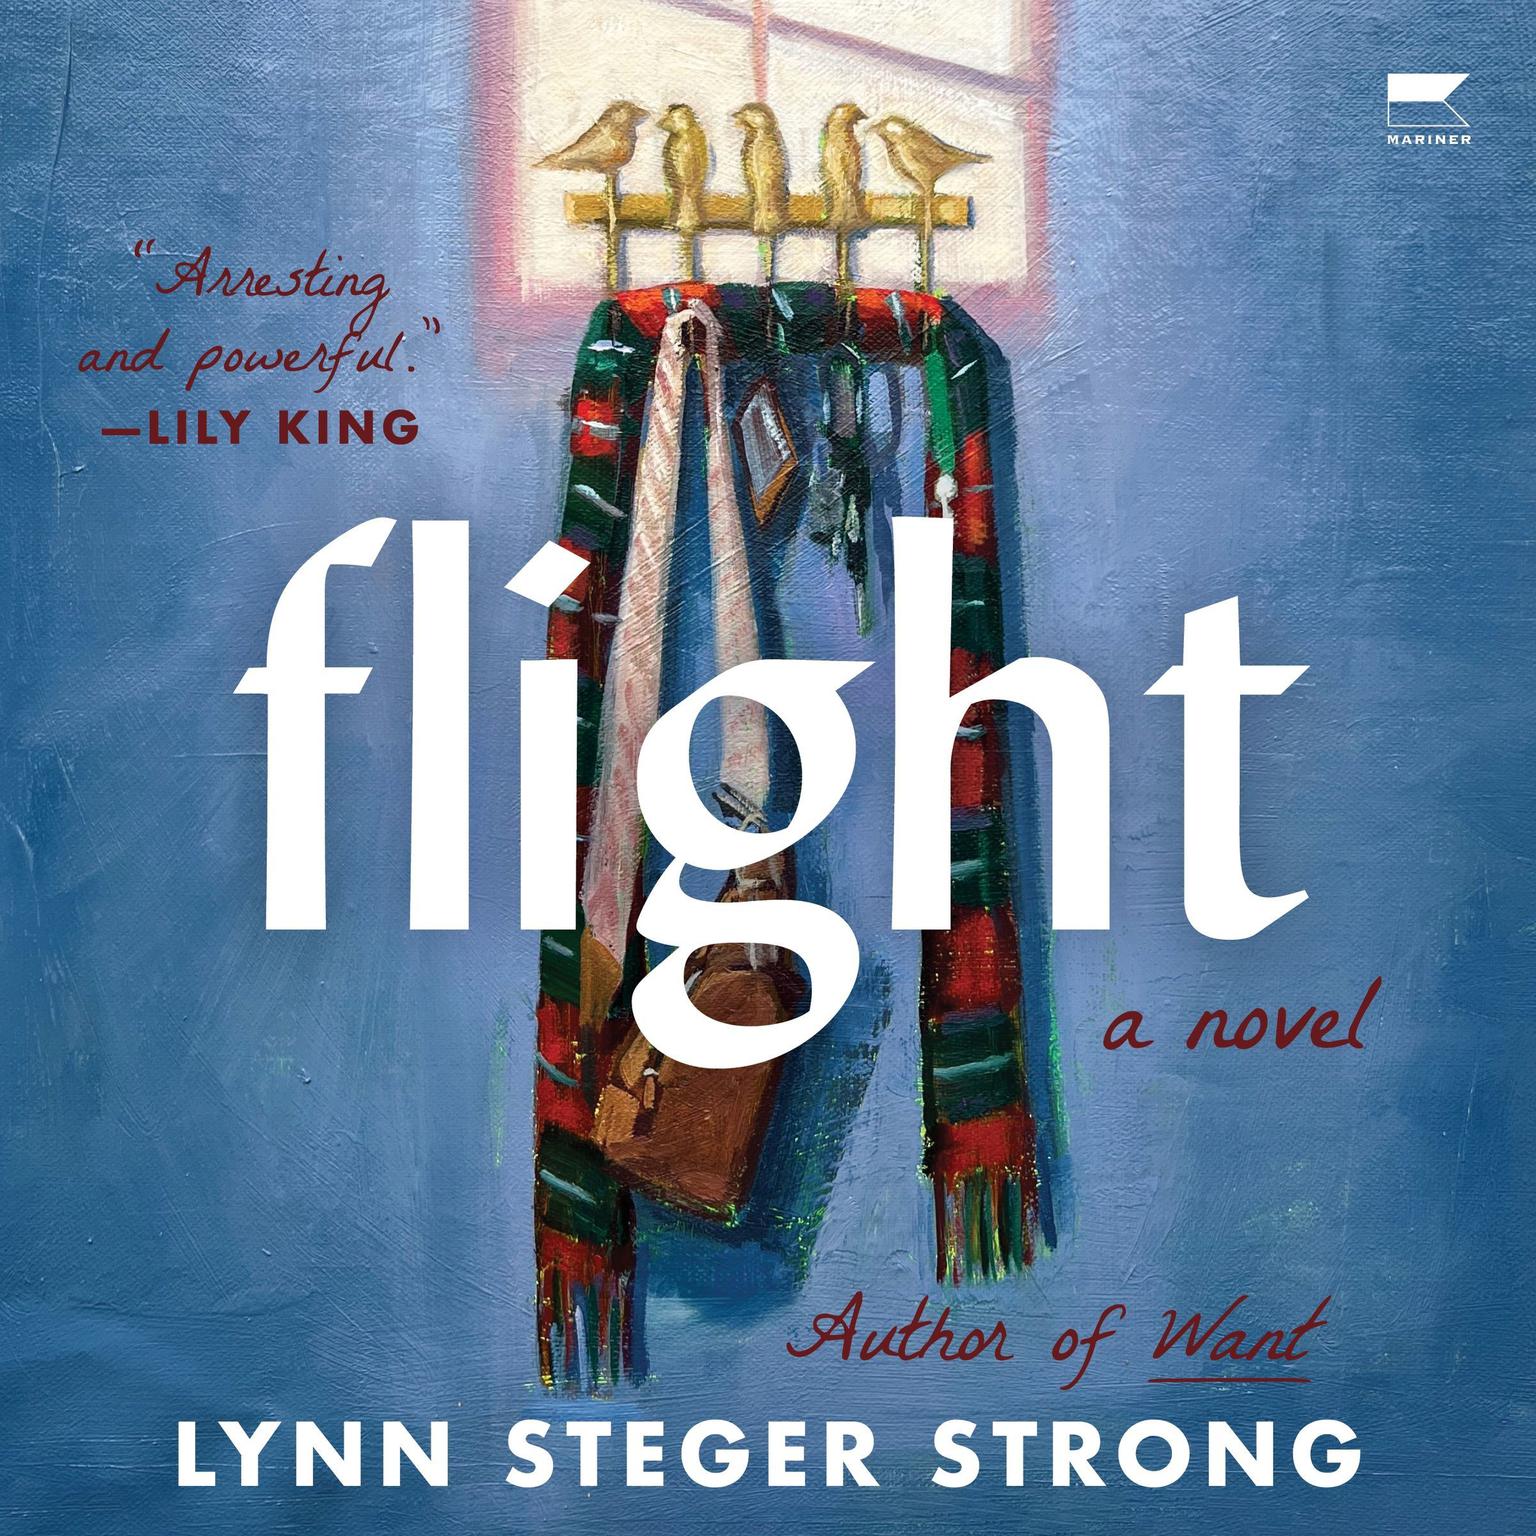 Flight: A Novel Audiobook, by Lynn  Steger Strong